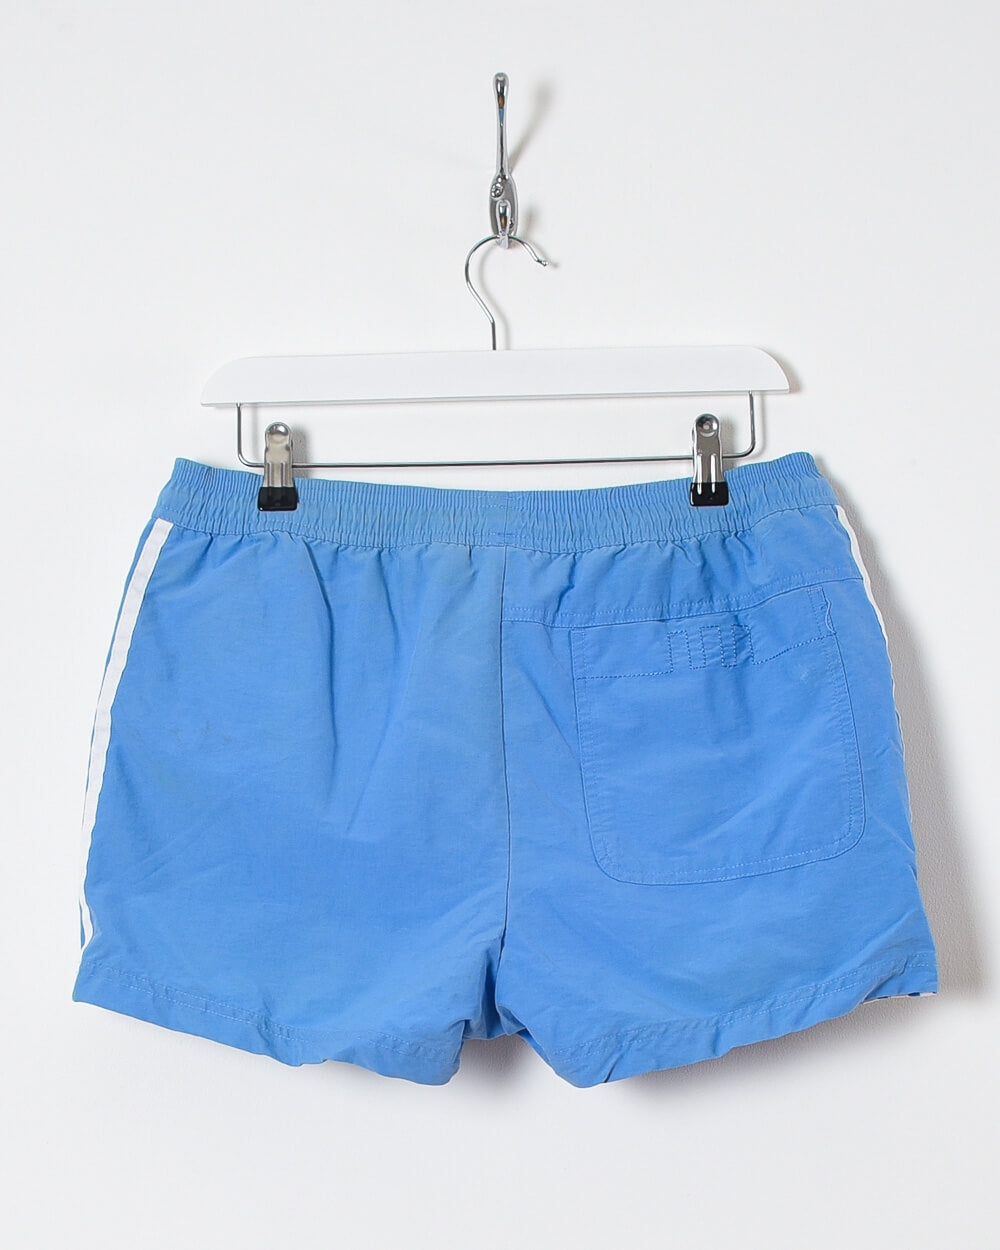 Adidas Swimwear Shorts - W30 - Domno Vintage 90s, 80s, 00s Retro and Vintage Clothing 